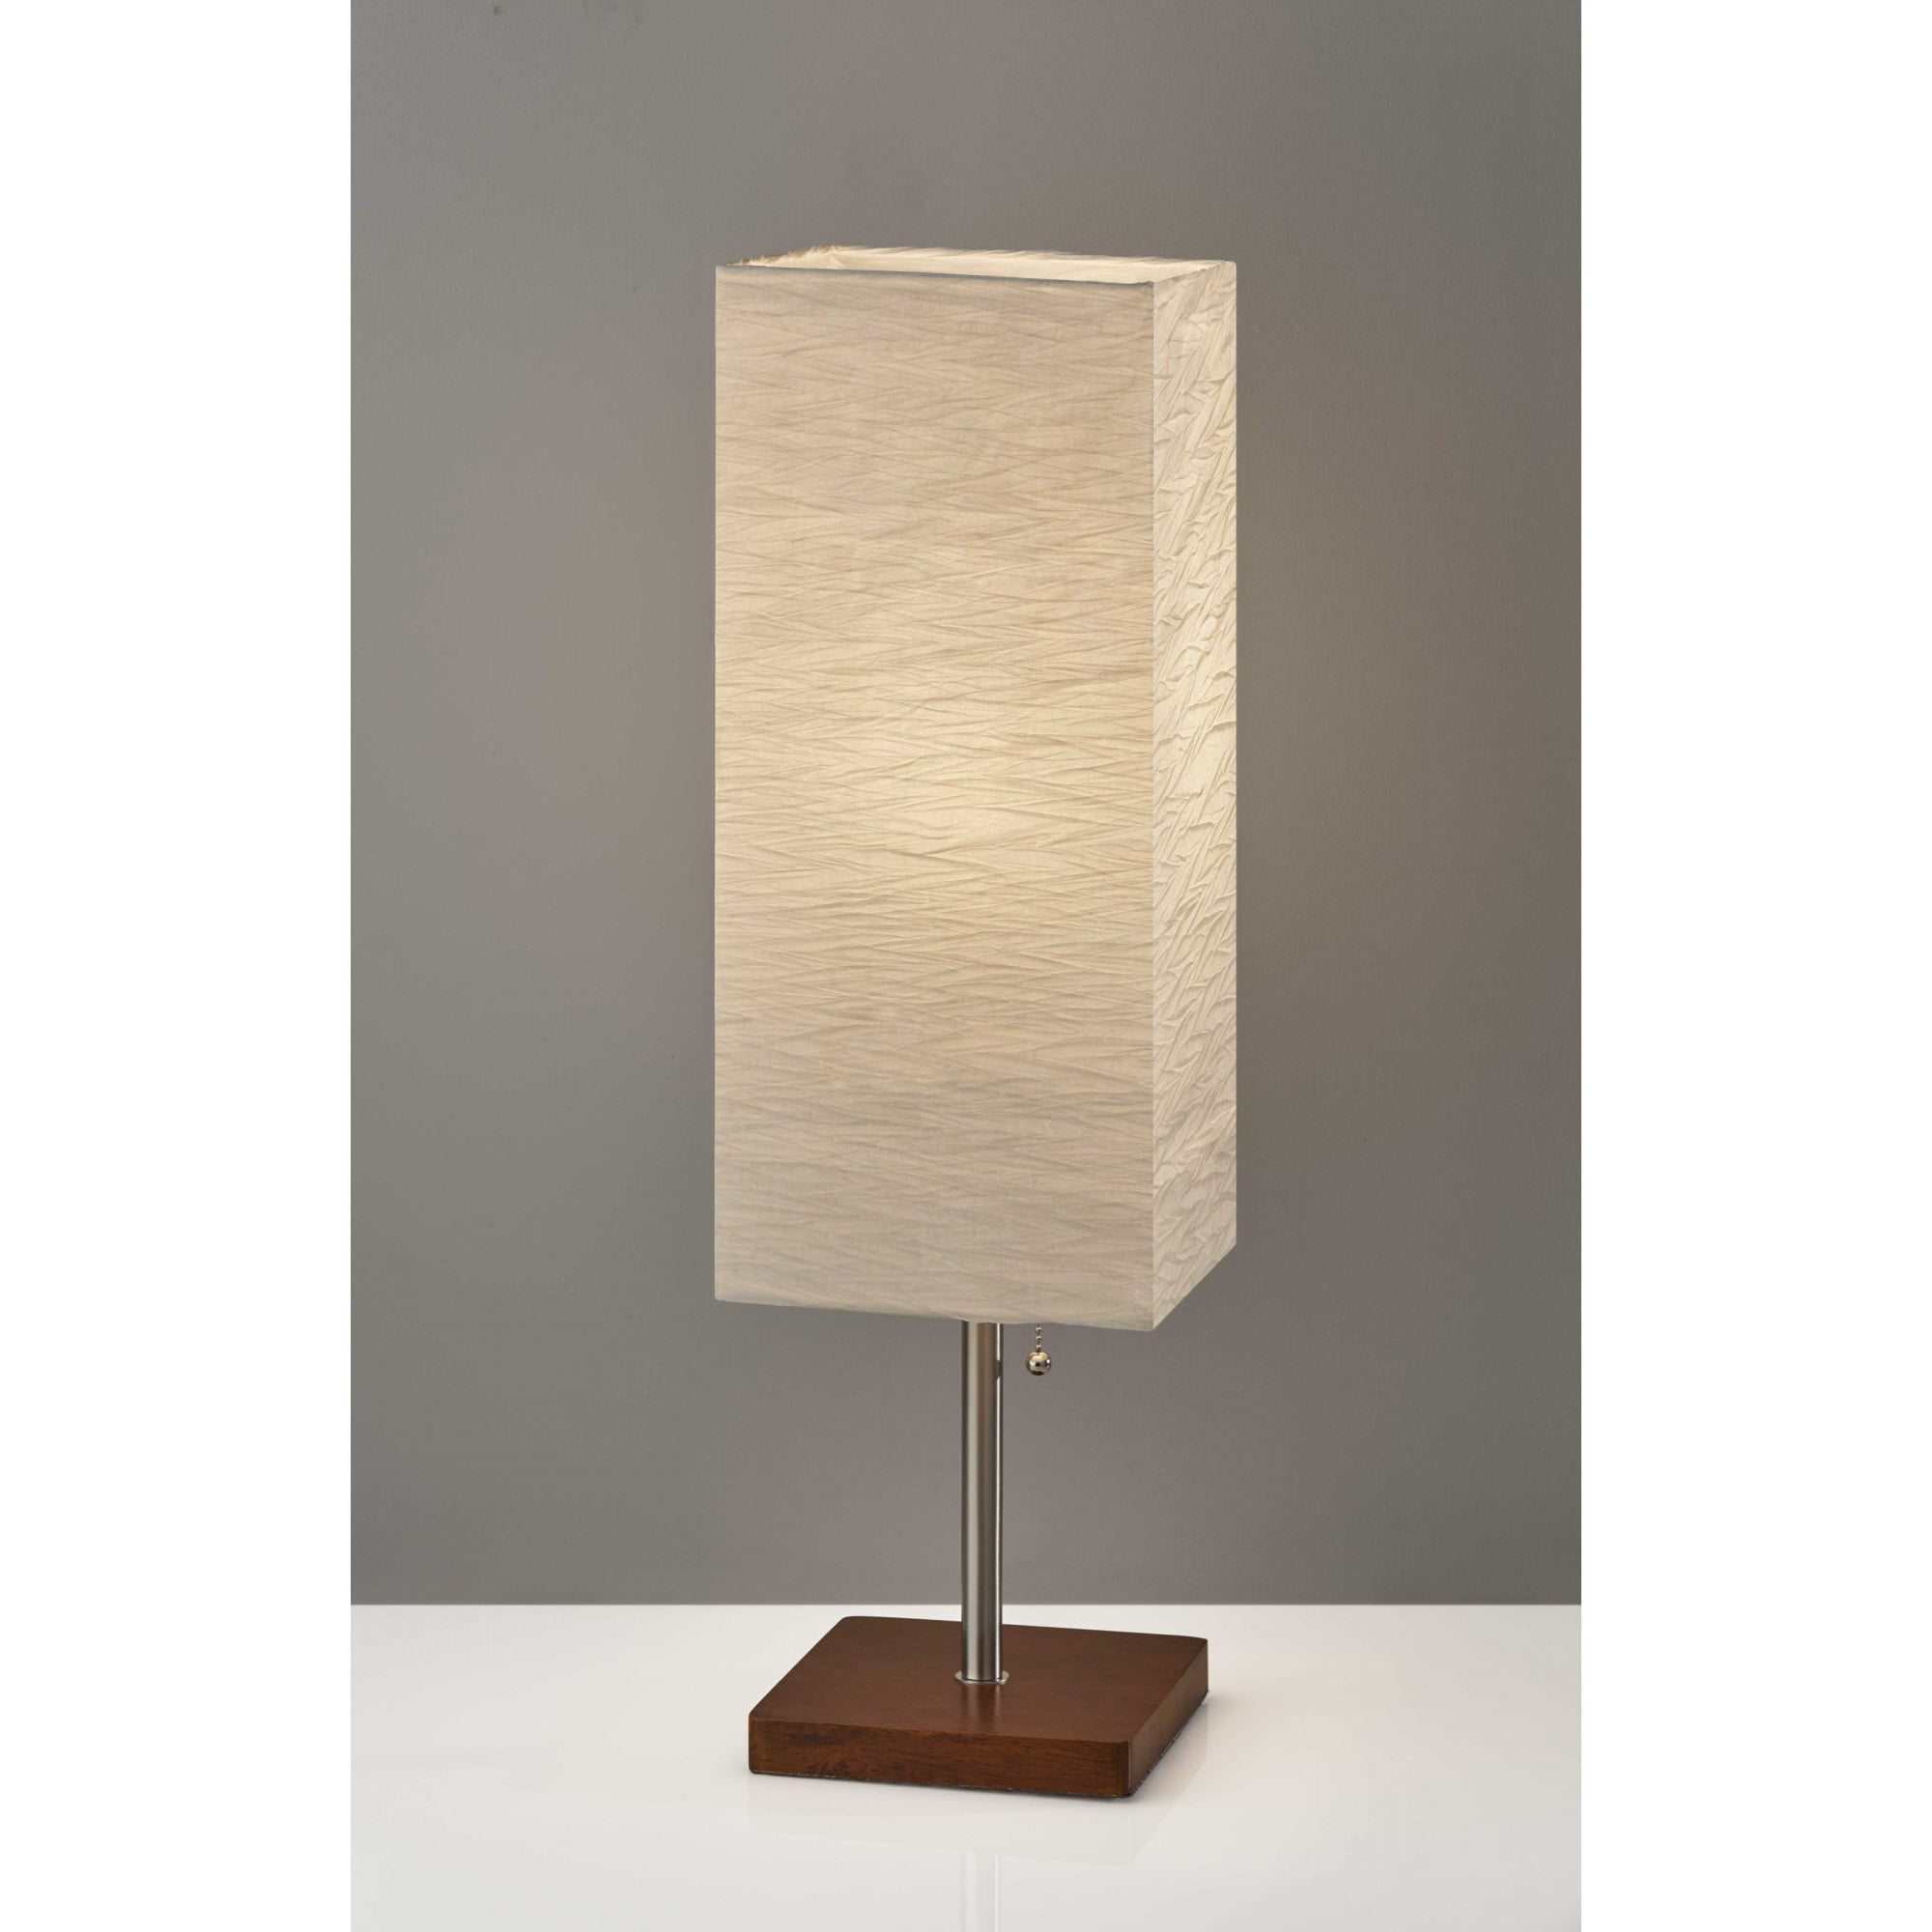 Walnut Wood Table Lamp, Ikea Magnarp Table Lamp Bulbs